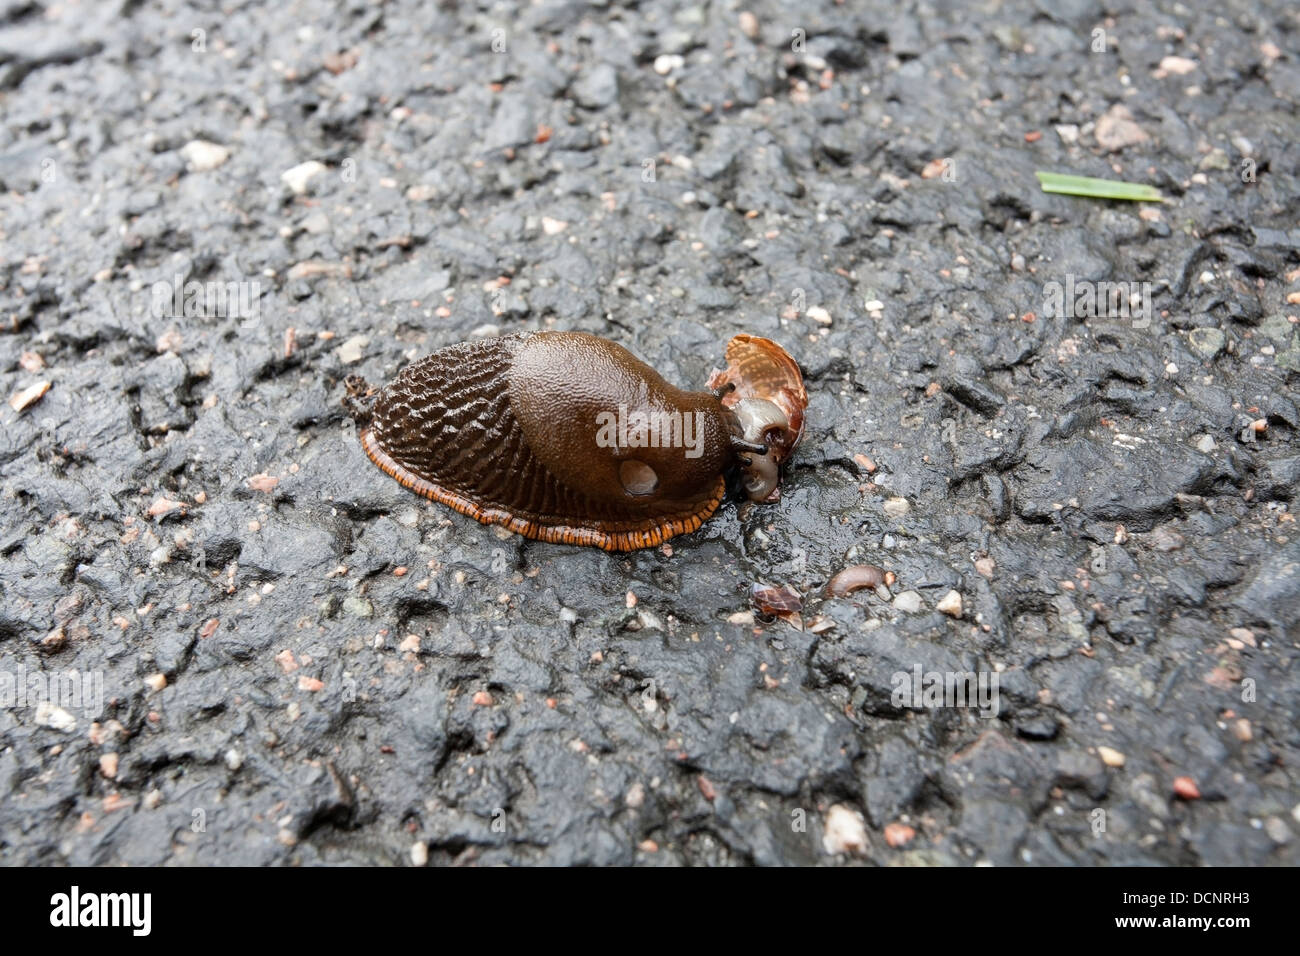 Spanish slug eating dead land snail, Finland Europe Stock Photo